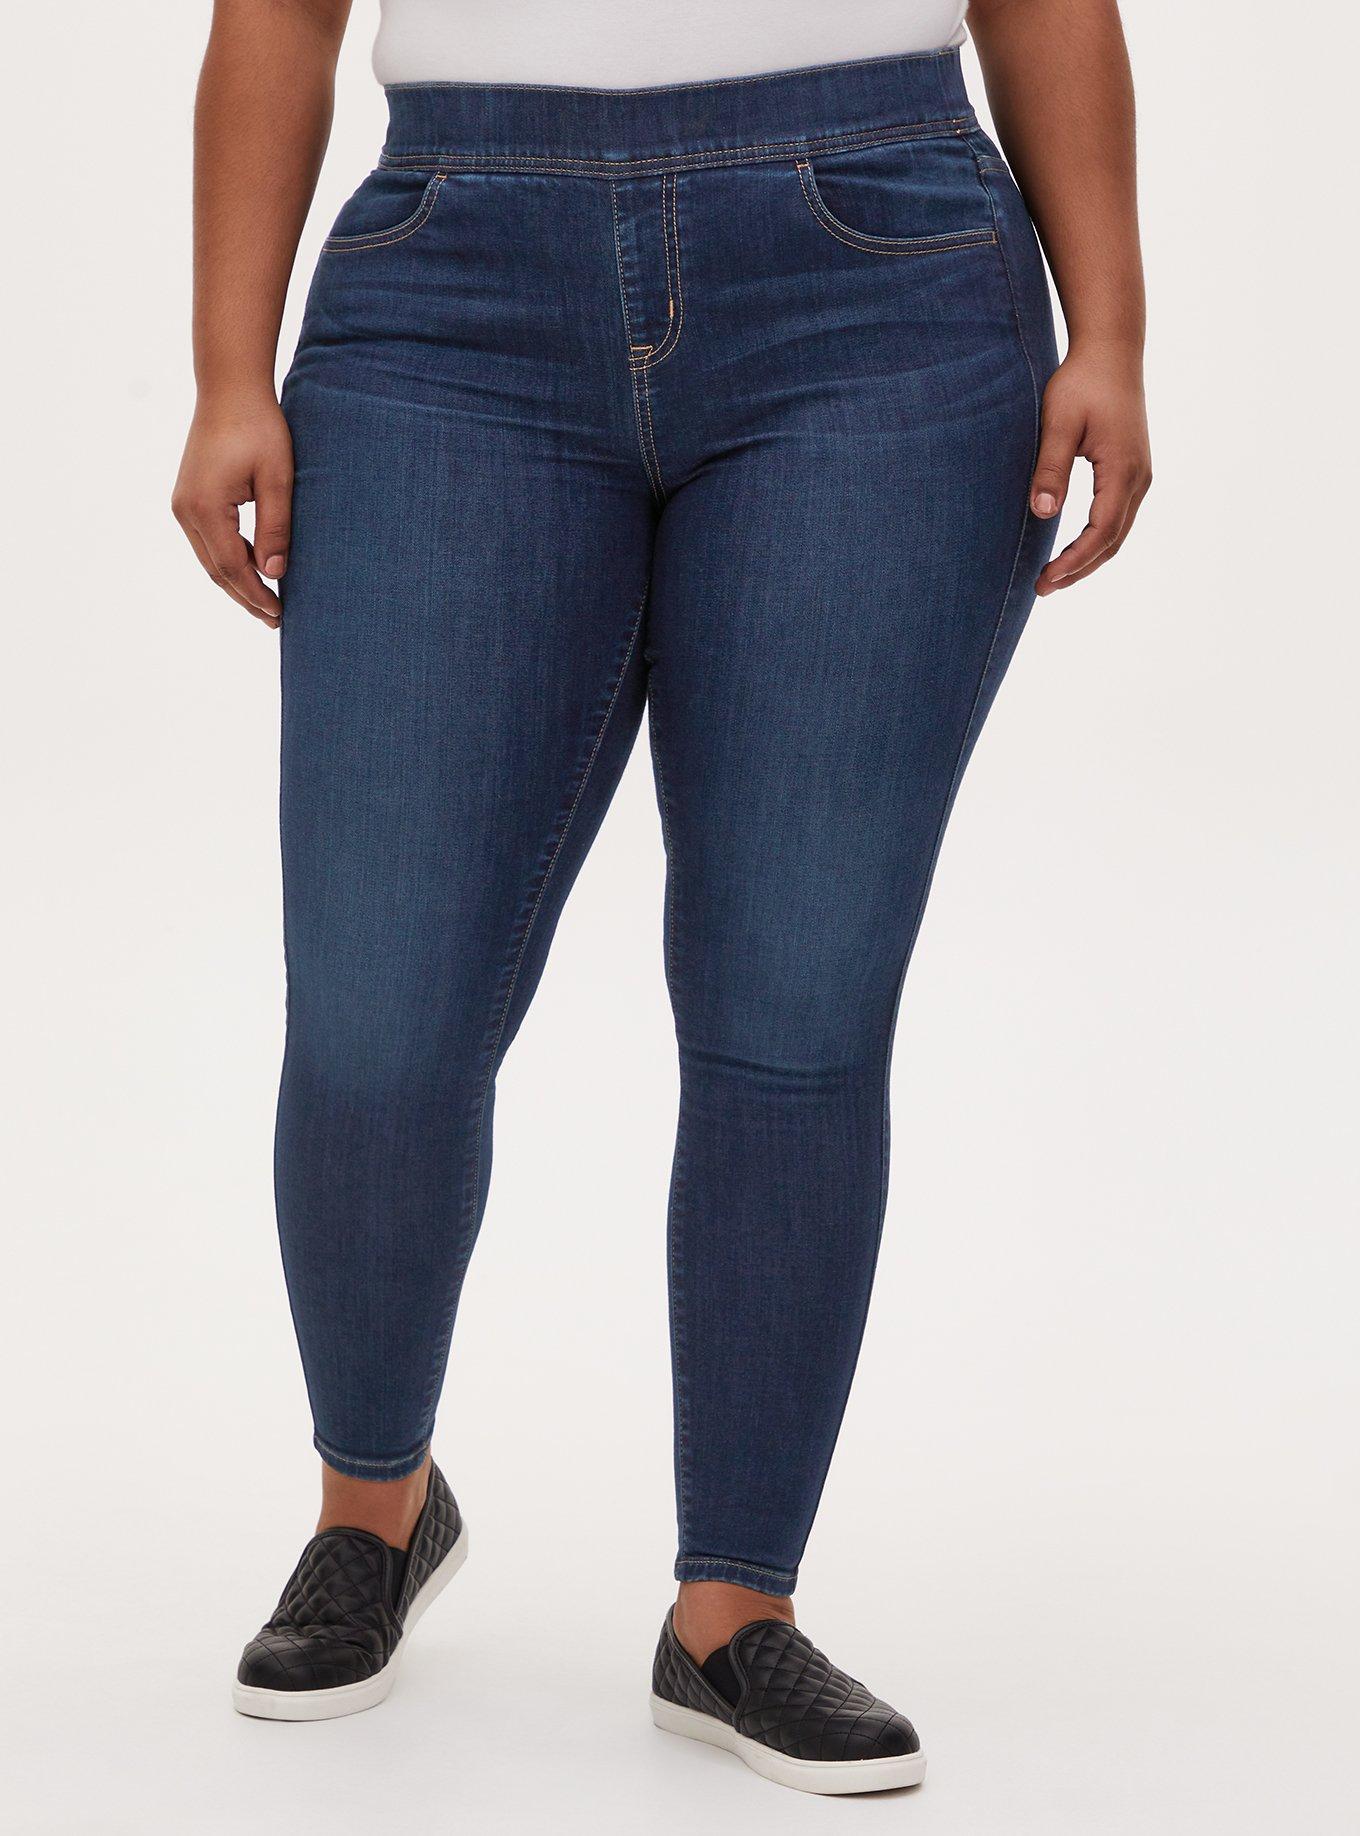 Plus Size - Lean Jean Skinny Super Soft High-Rise Jean - Torrid